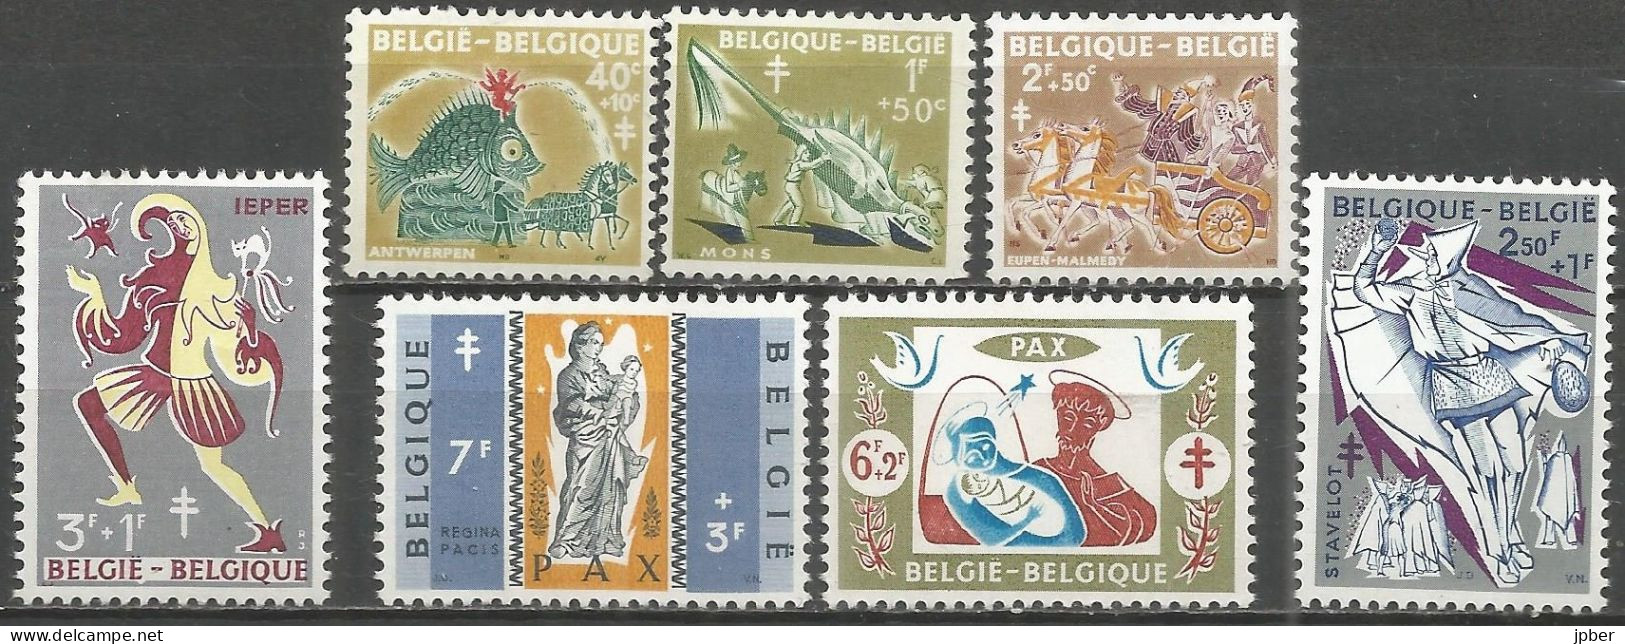 Belgique - Folklore - Anvers, Mons, Eupen, Stavelot, Ypres - N°1114 à 1120 */** - Nuevos